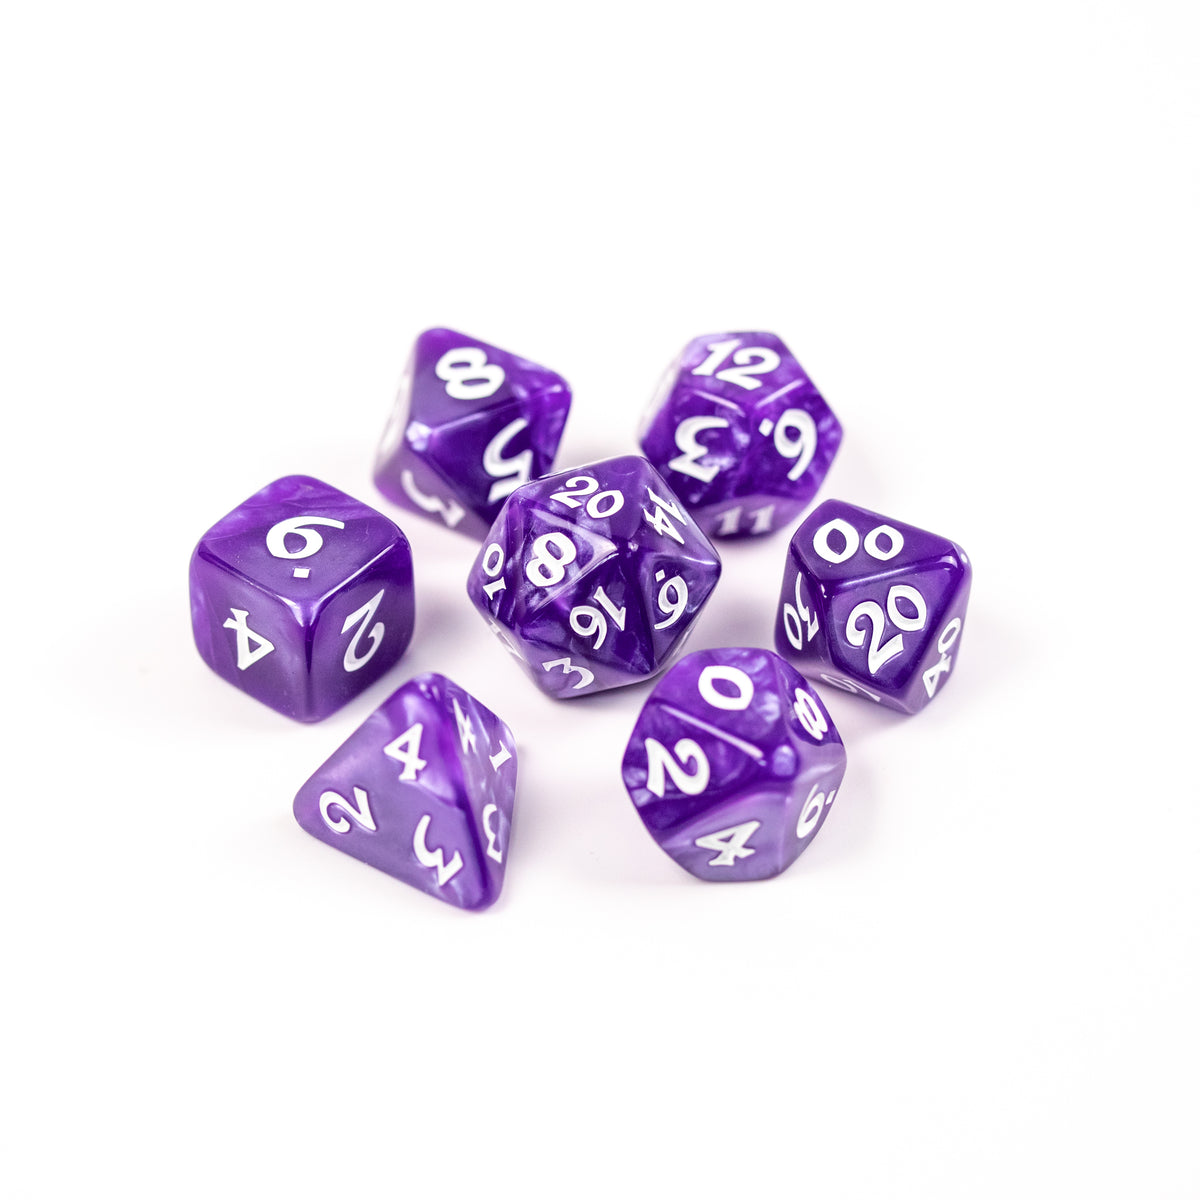 7pc RPG Set - Elessia Essentials - Purple with White